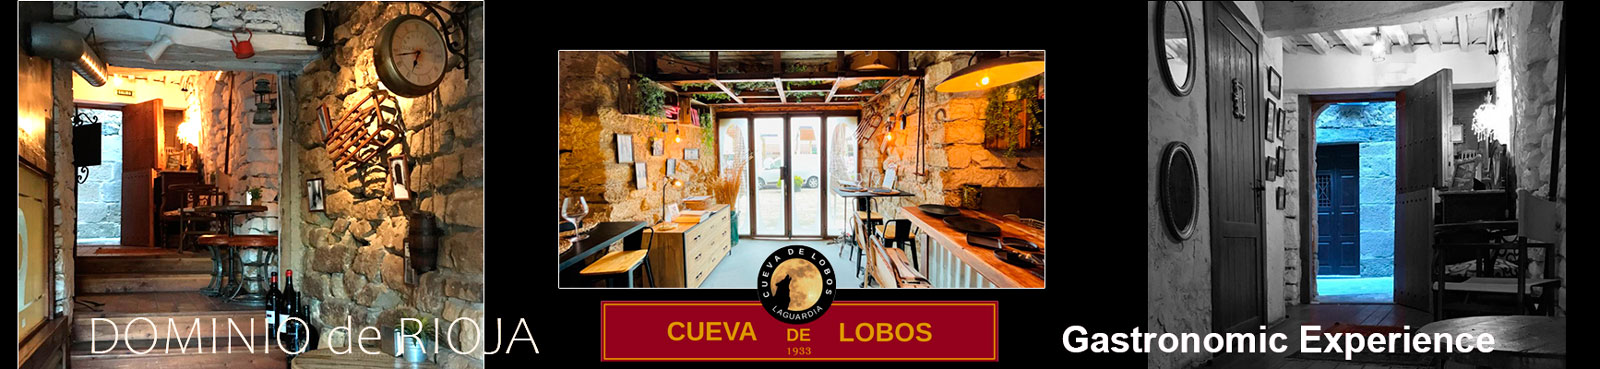 Restaurant-Cueva-de-Lobos-Gastronomic-Exp-1